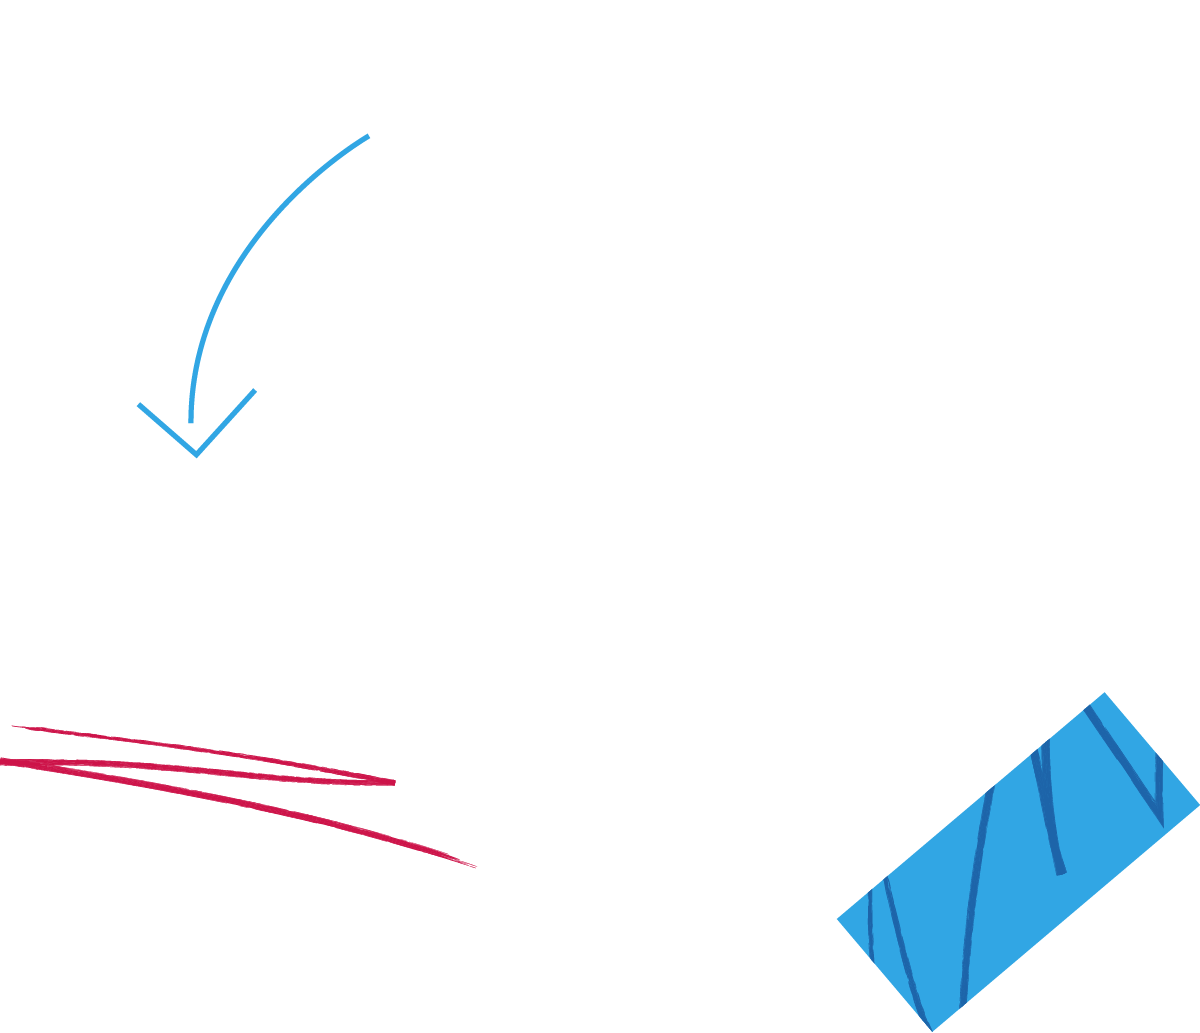 Top left: a blue arrow. Bottom left: a red scribble. Bottom right: a blue rectangular object.